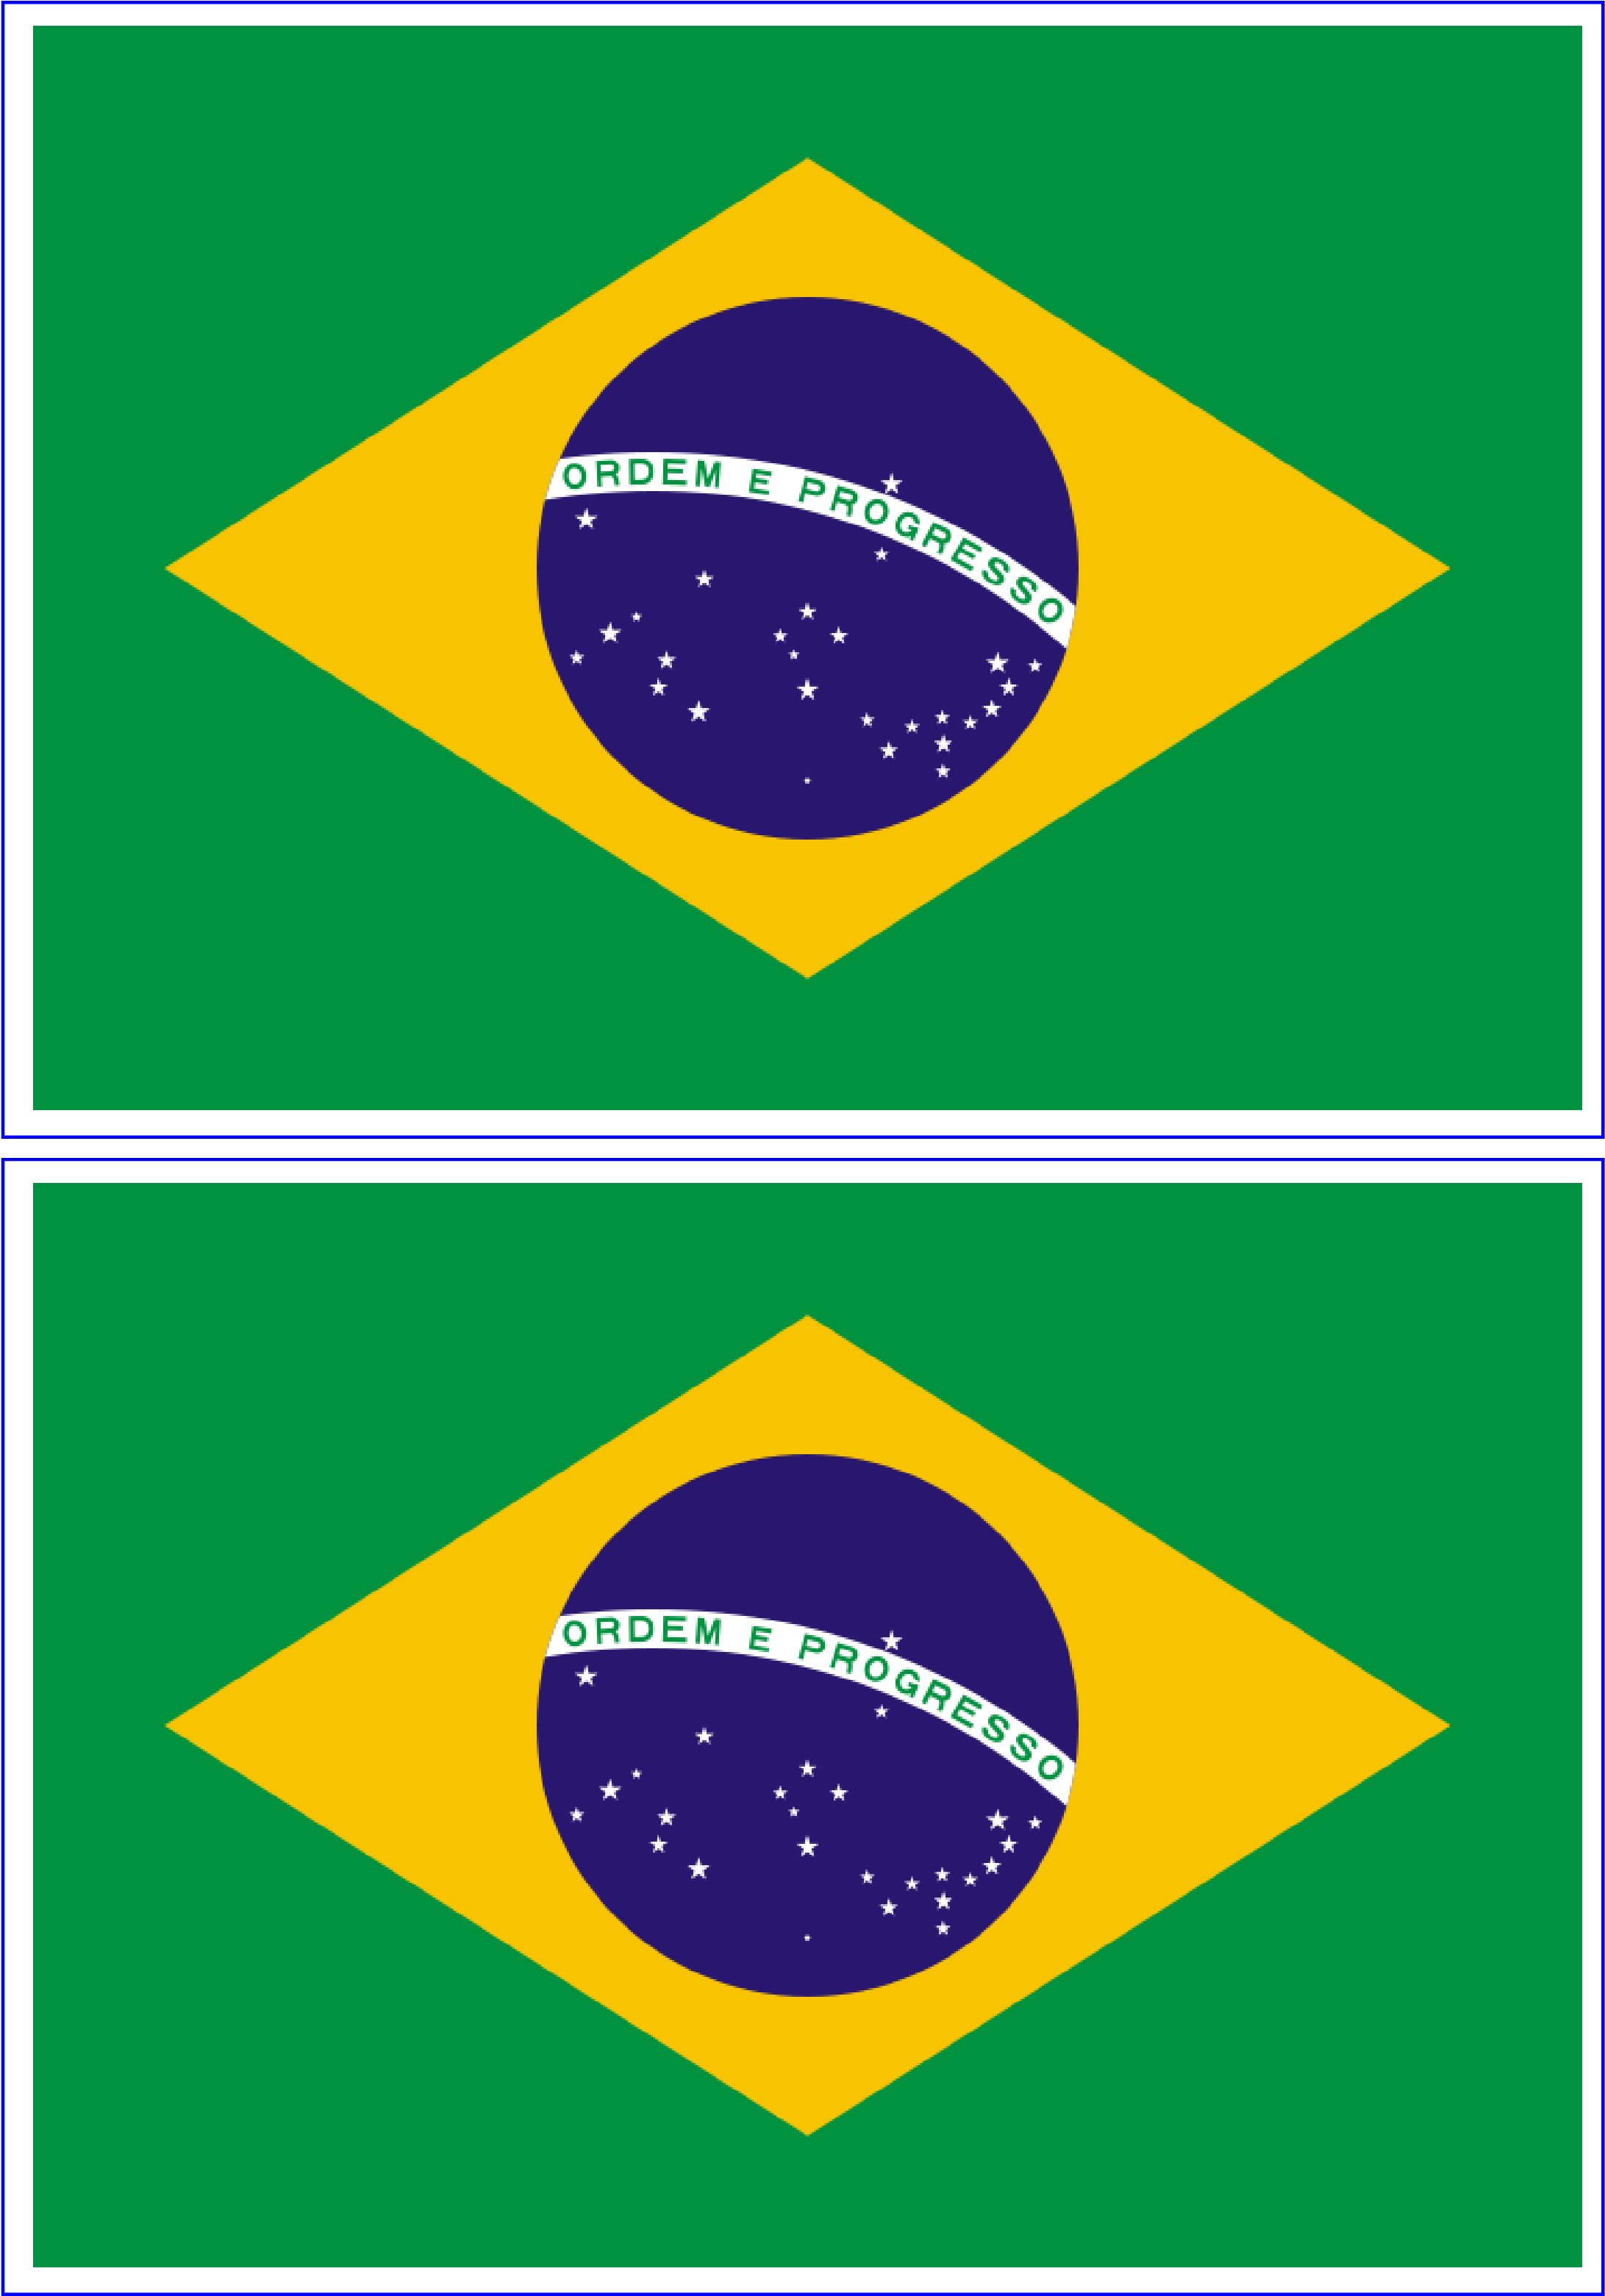 Brazil Flag PNG Image